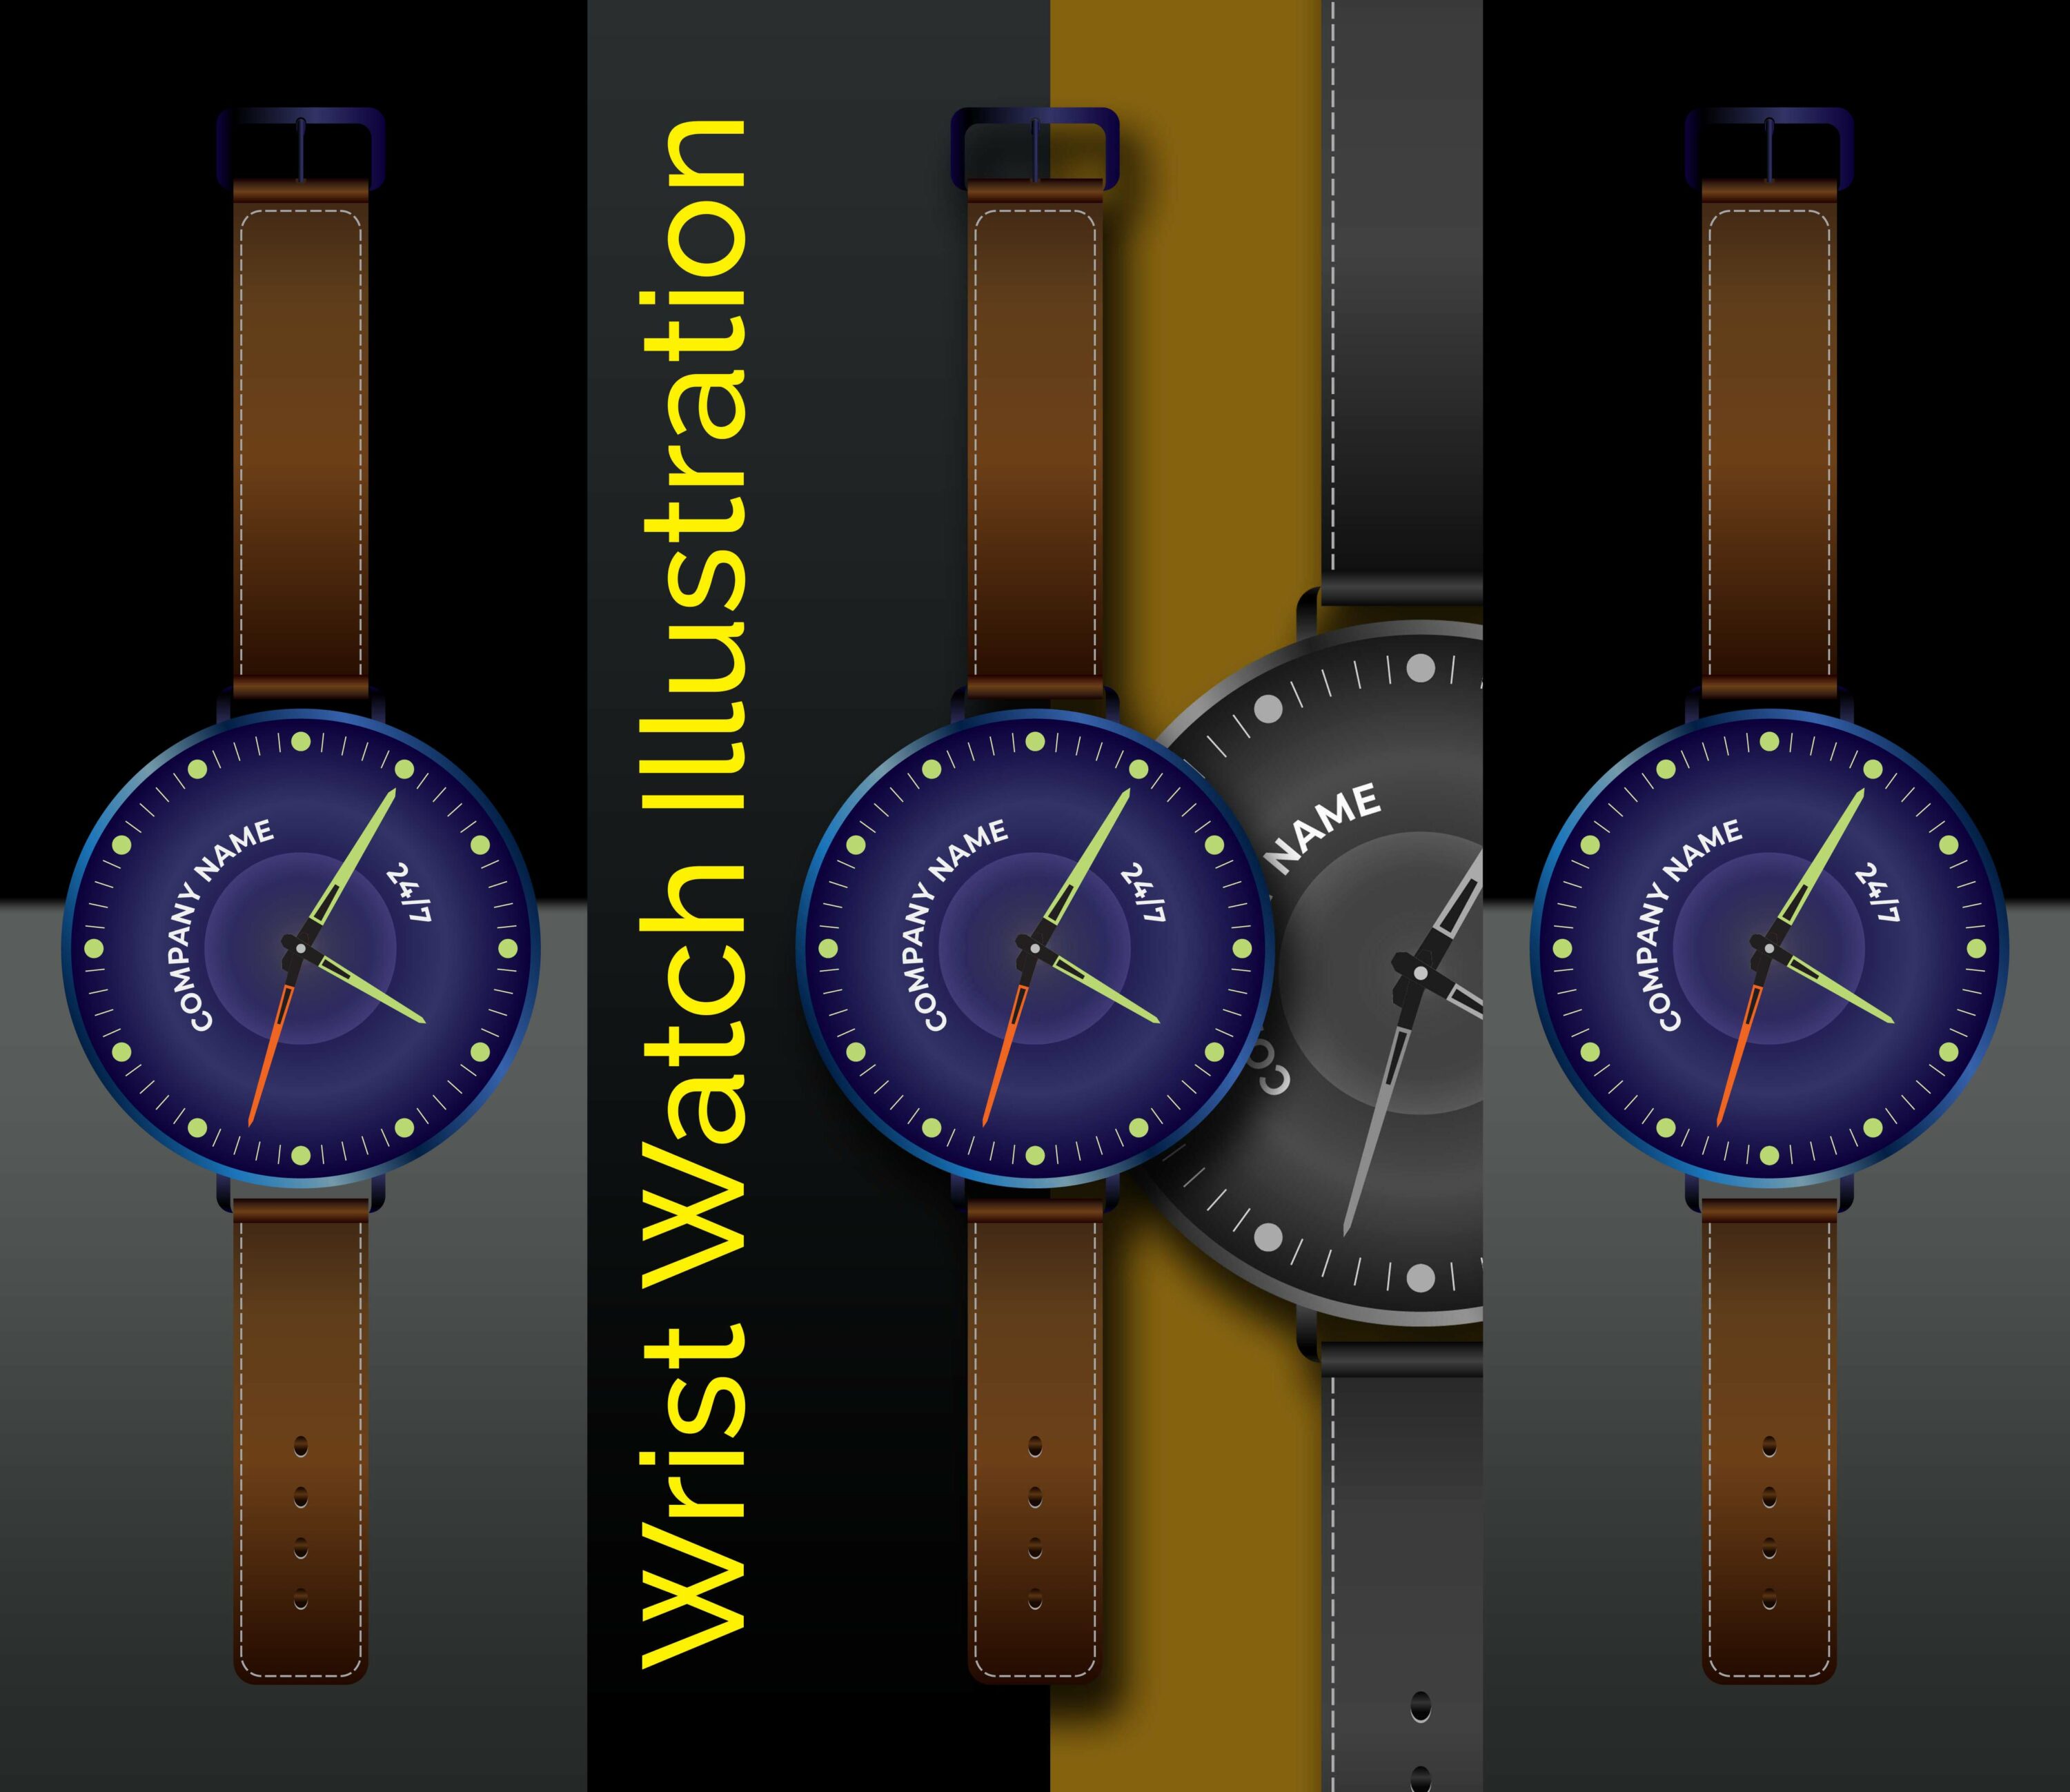 wrist watch illustration facebook image.